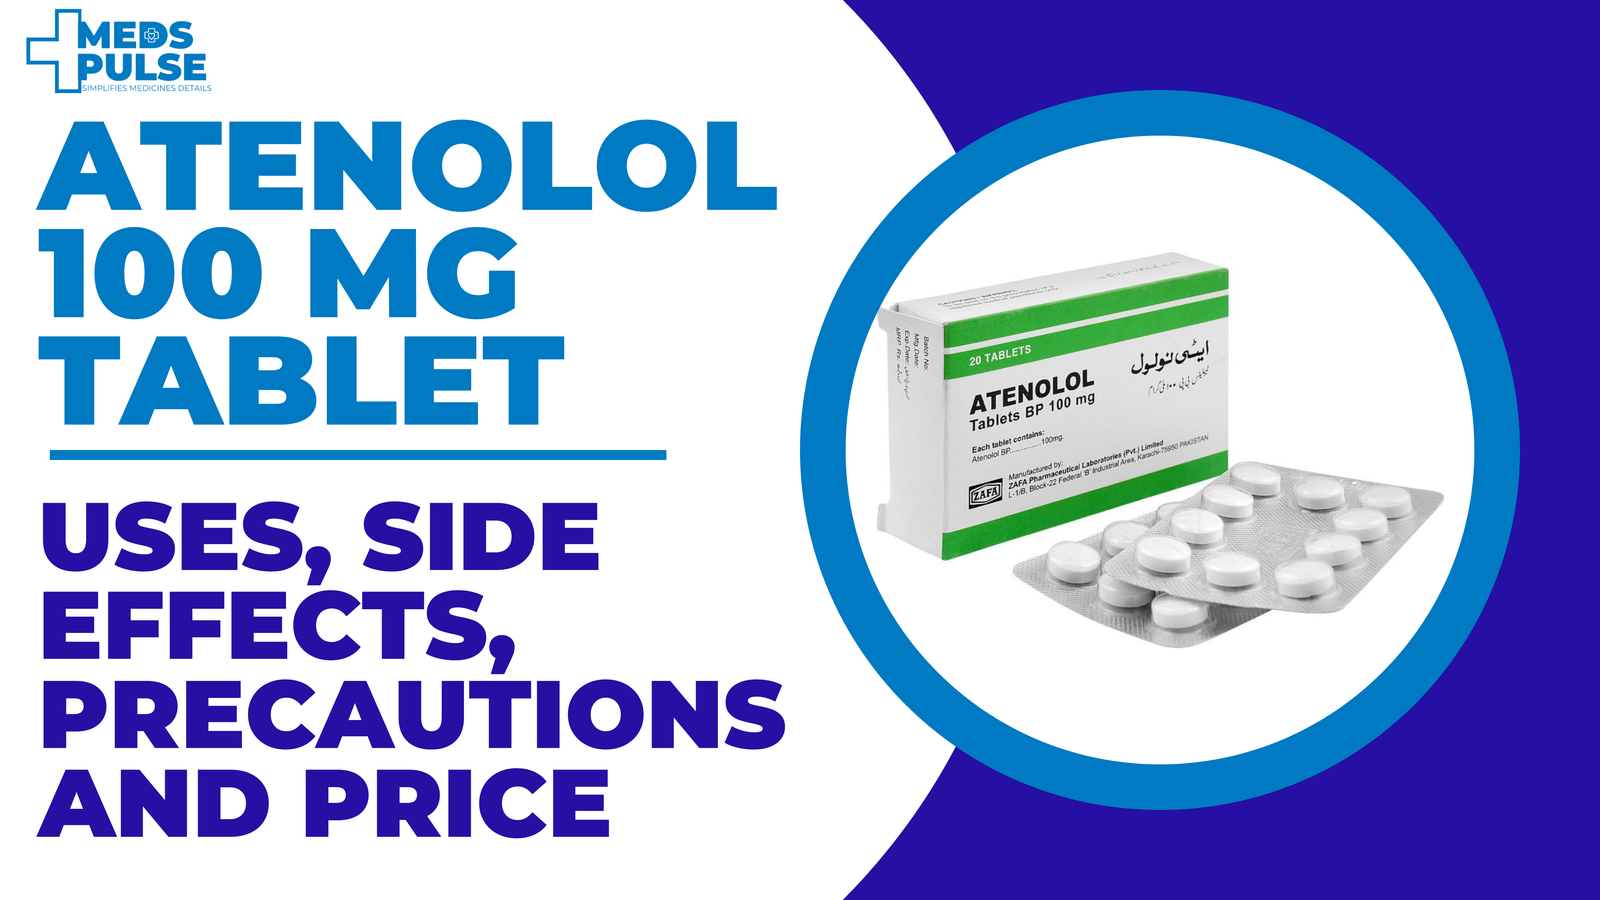 Atenolol 100mg tablet